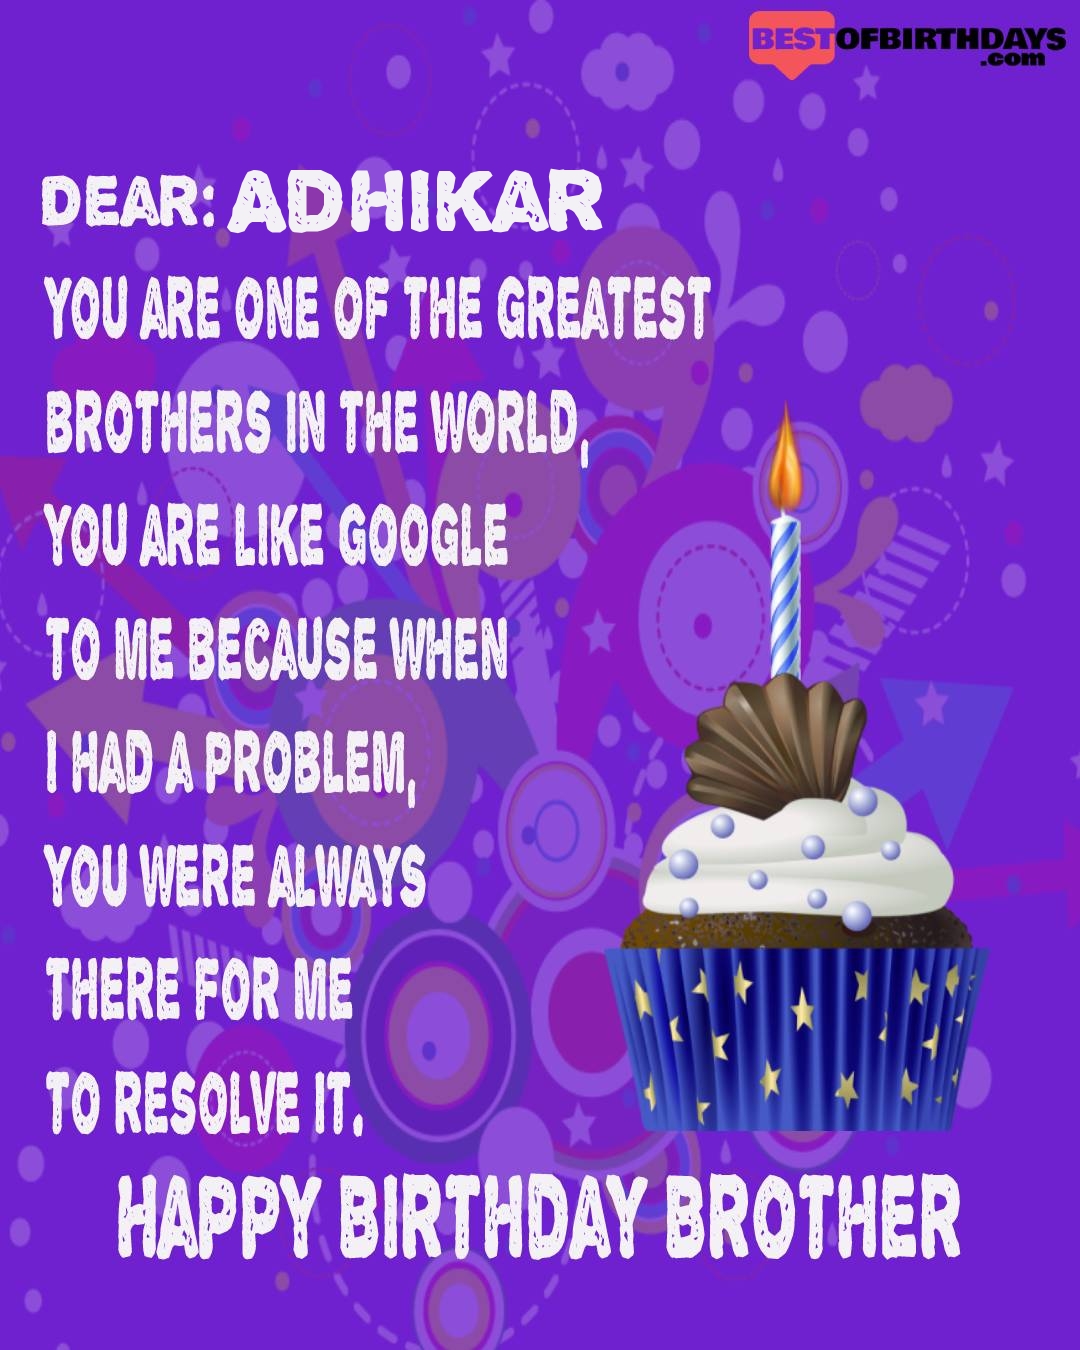 Happy birthday adhikar bhai brother bro